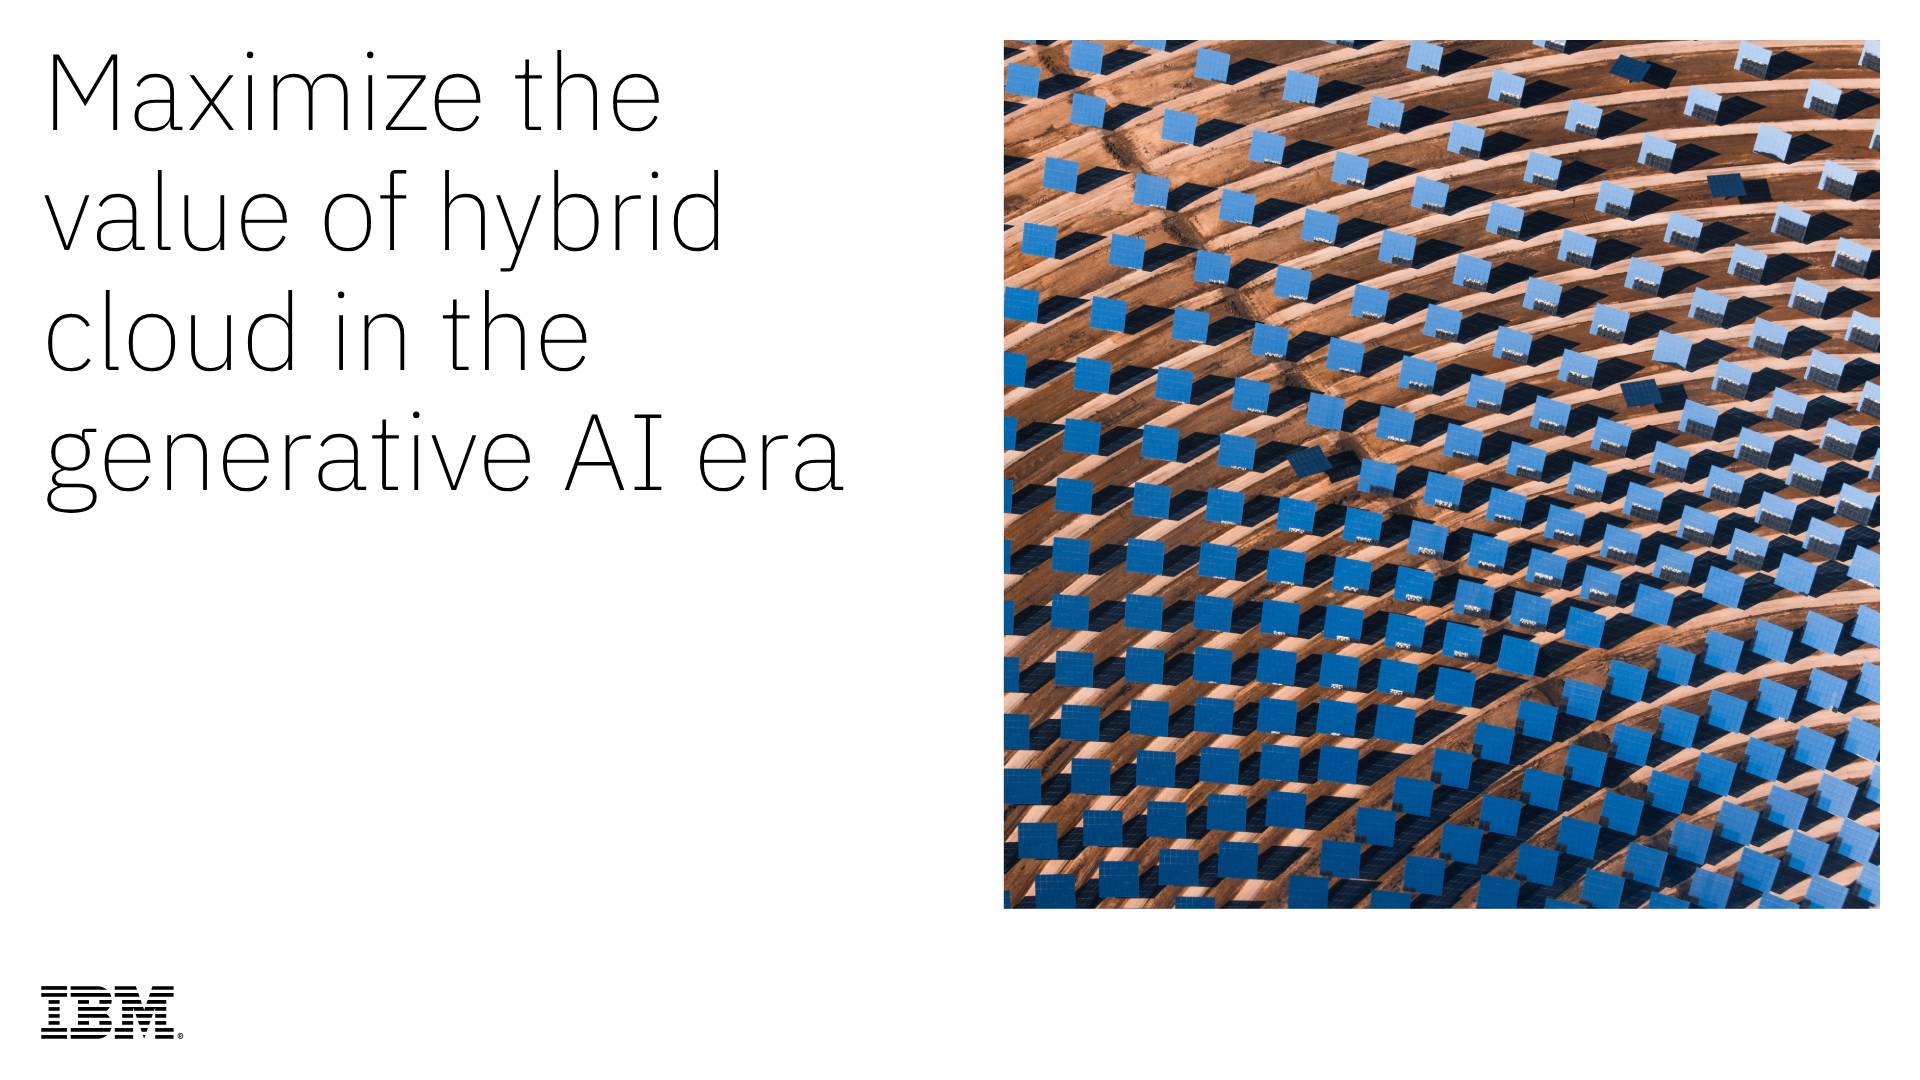 Maximize the value of hybrid cloud in the generative AI era